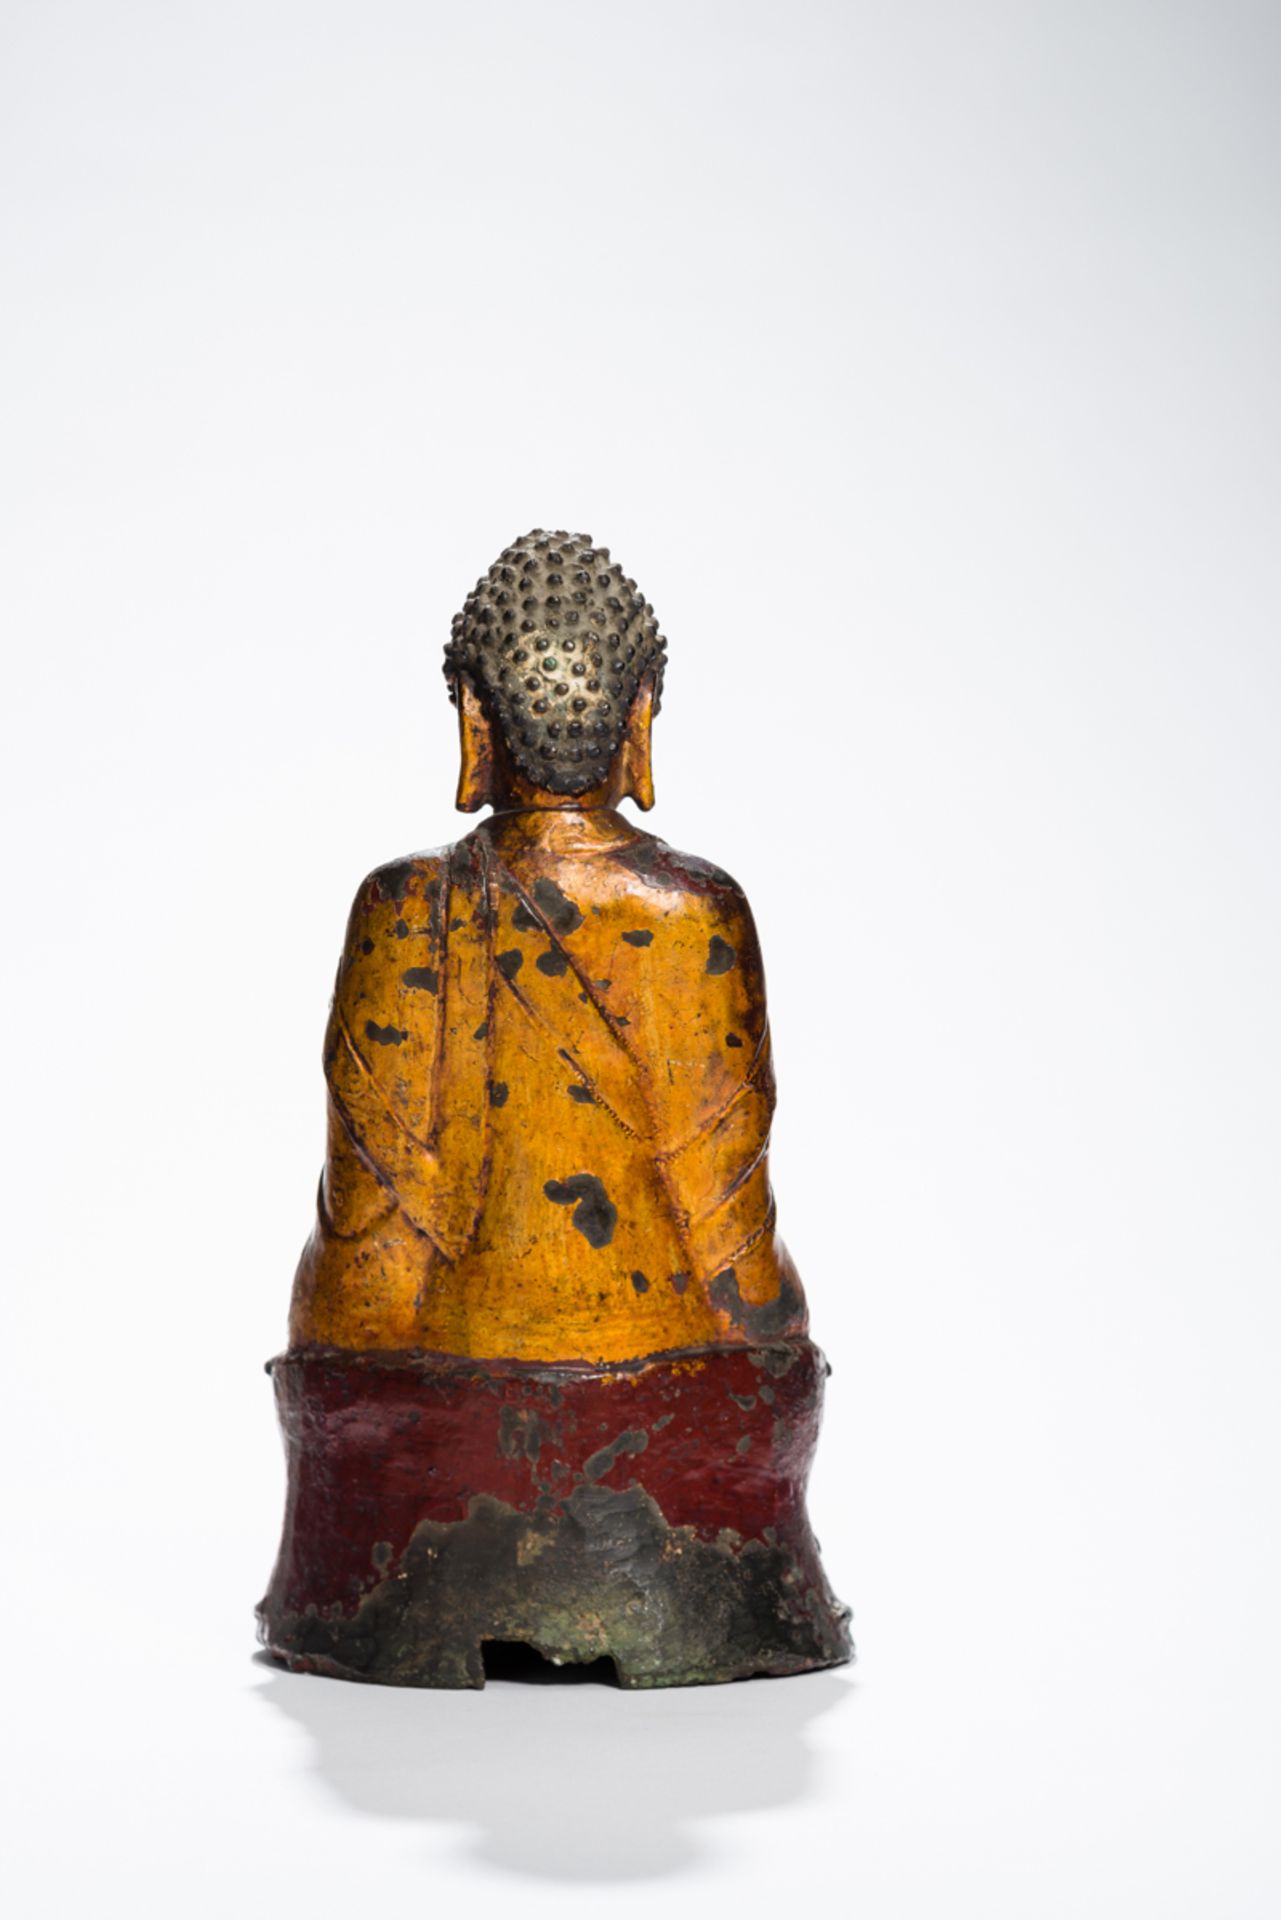 BUDDHA MIT DEm SELTENEN GESTUS DES SALBENSBronze mit Vergoldung. China, ca. 17. Jh.Buddha - Image 6 of 8